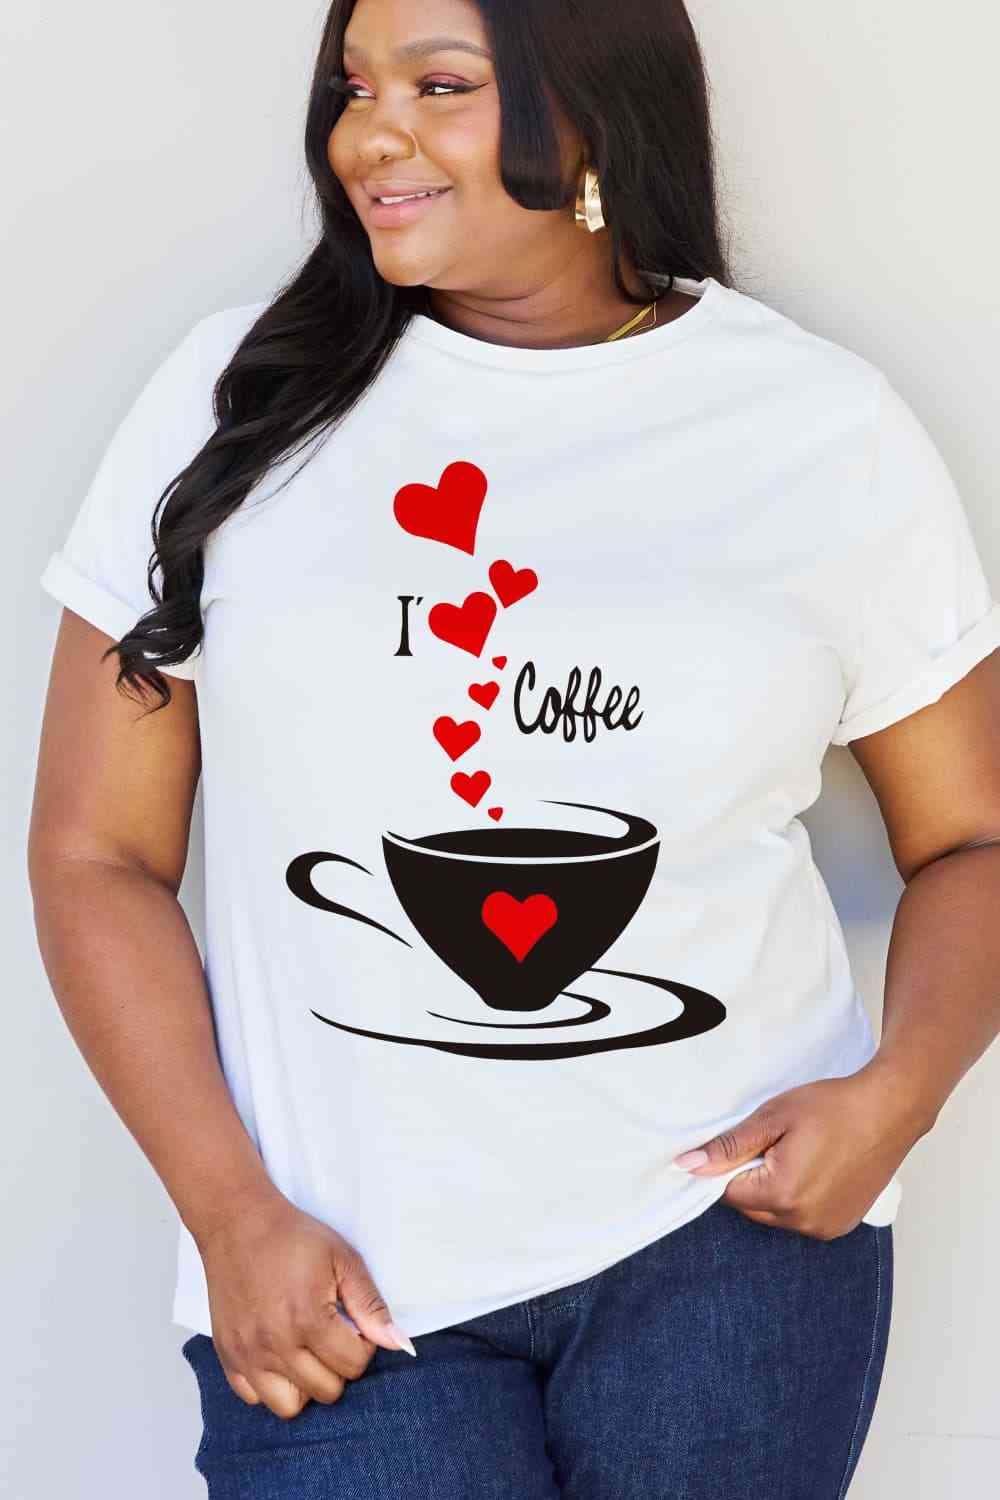 I LOVE COFFEE Graphic Cotton Tee - Bleach / S - T-Shirts - Shirts & Tops - 13 - 2024